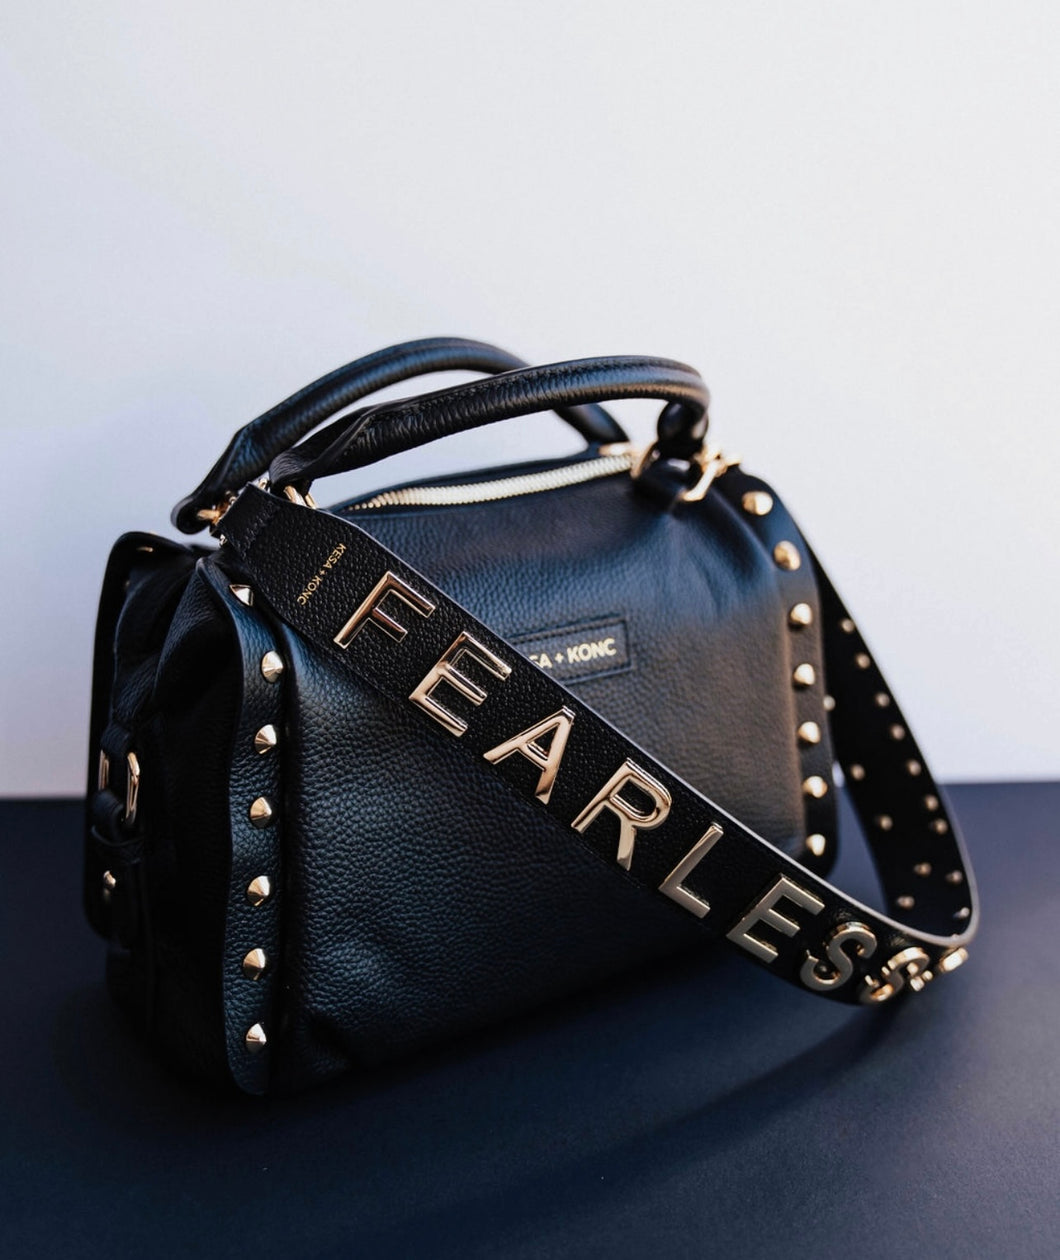 Fearless Bag Strap By Kesa & Konc Gold Hardware